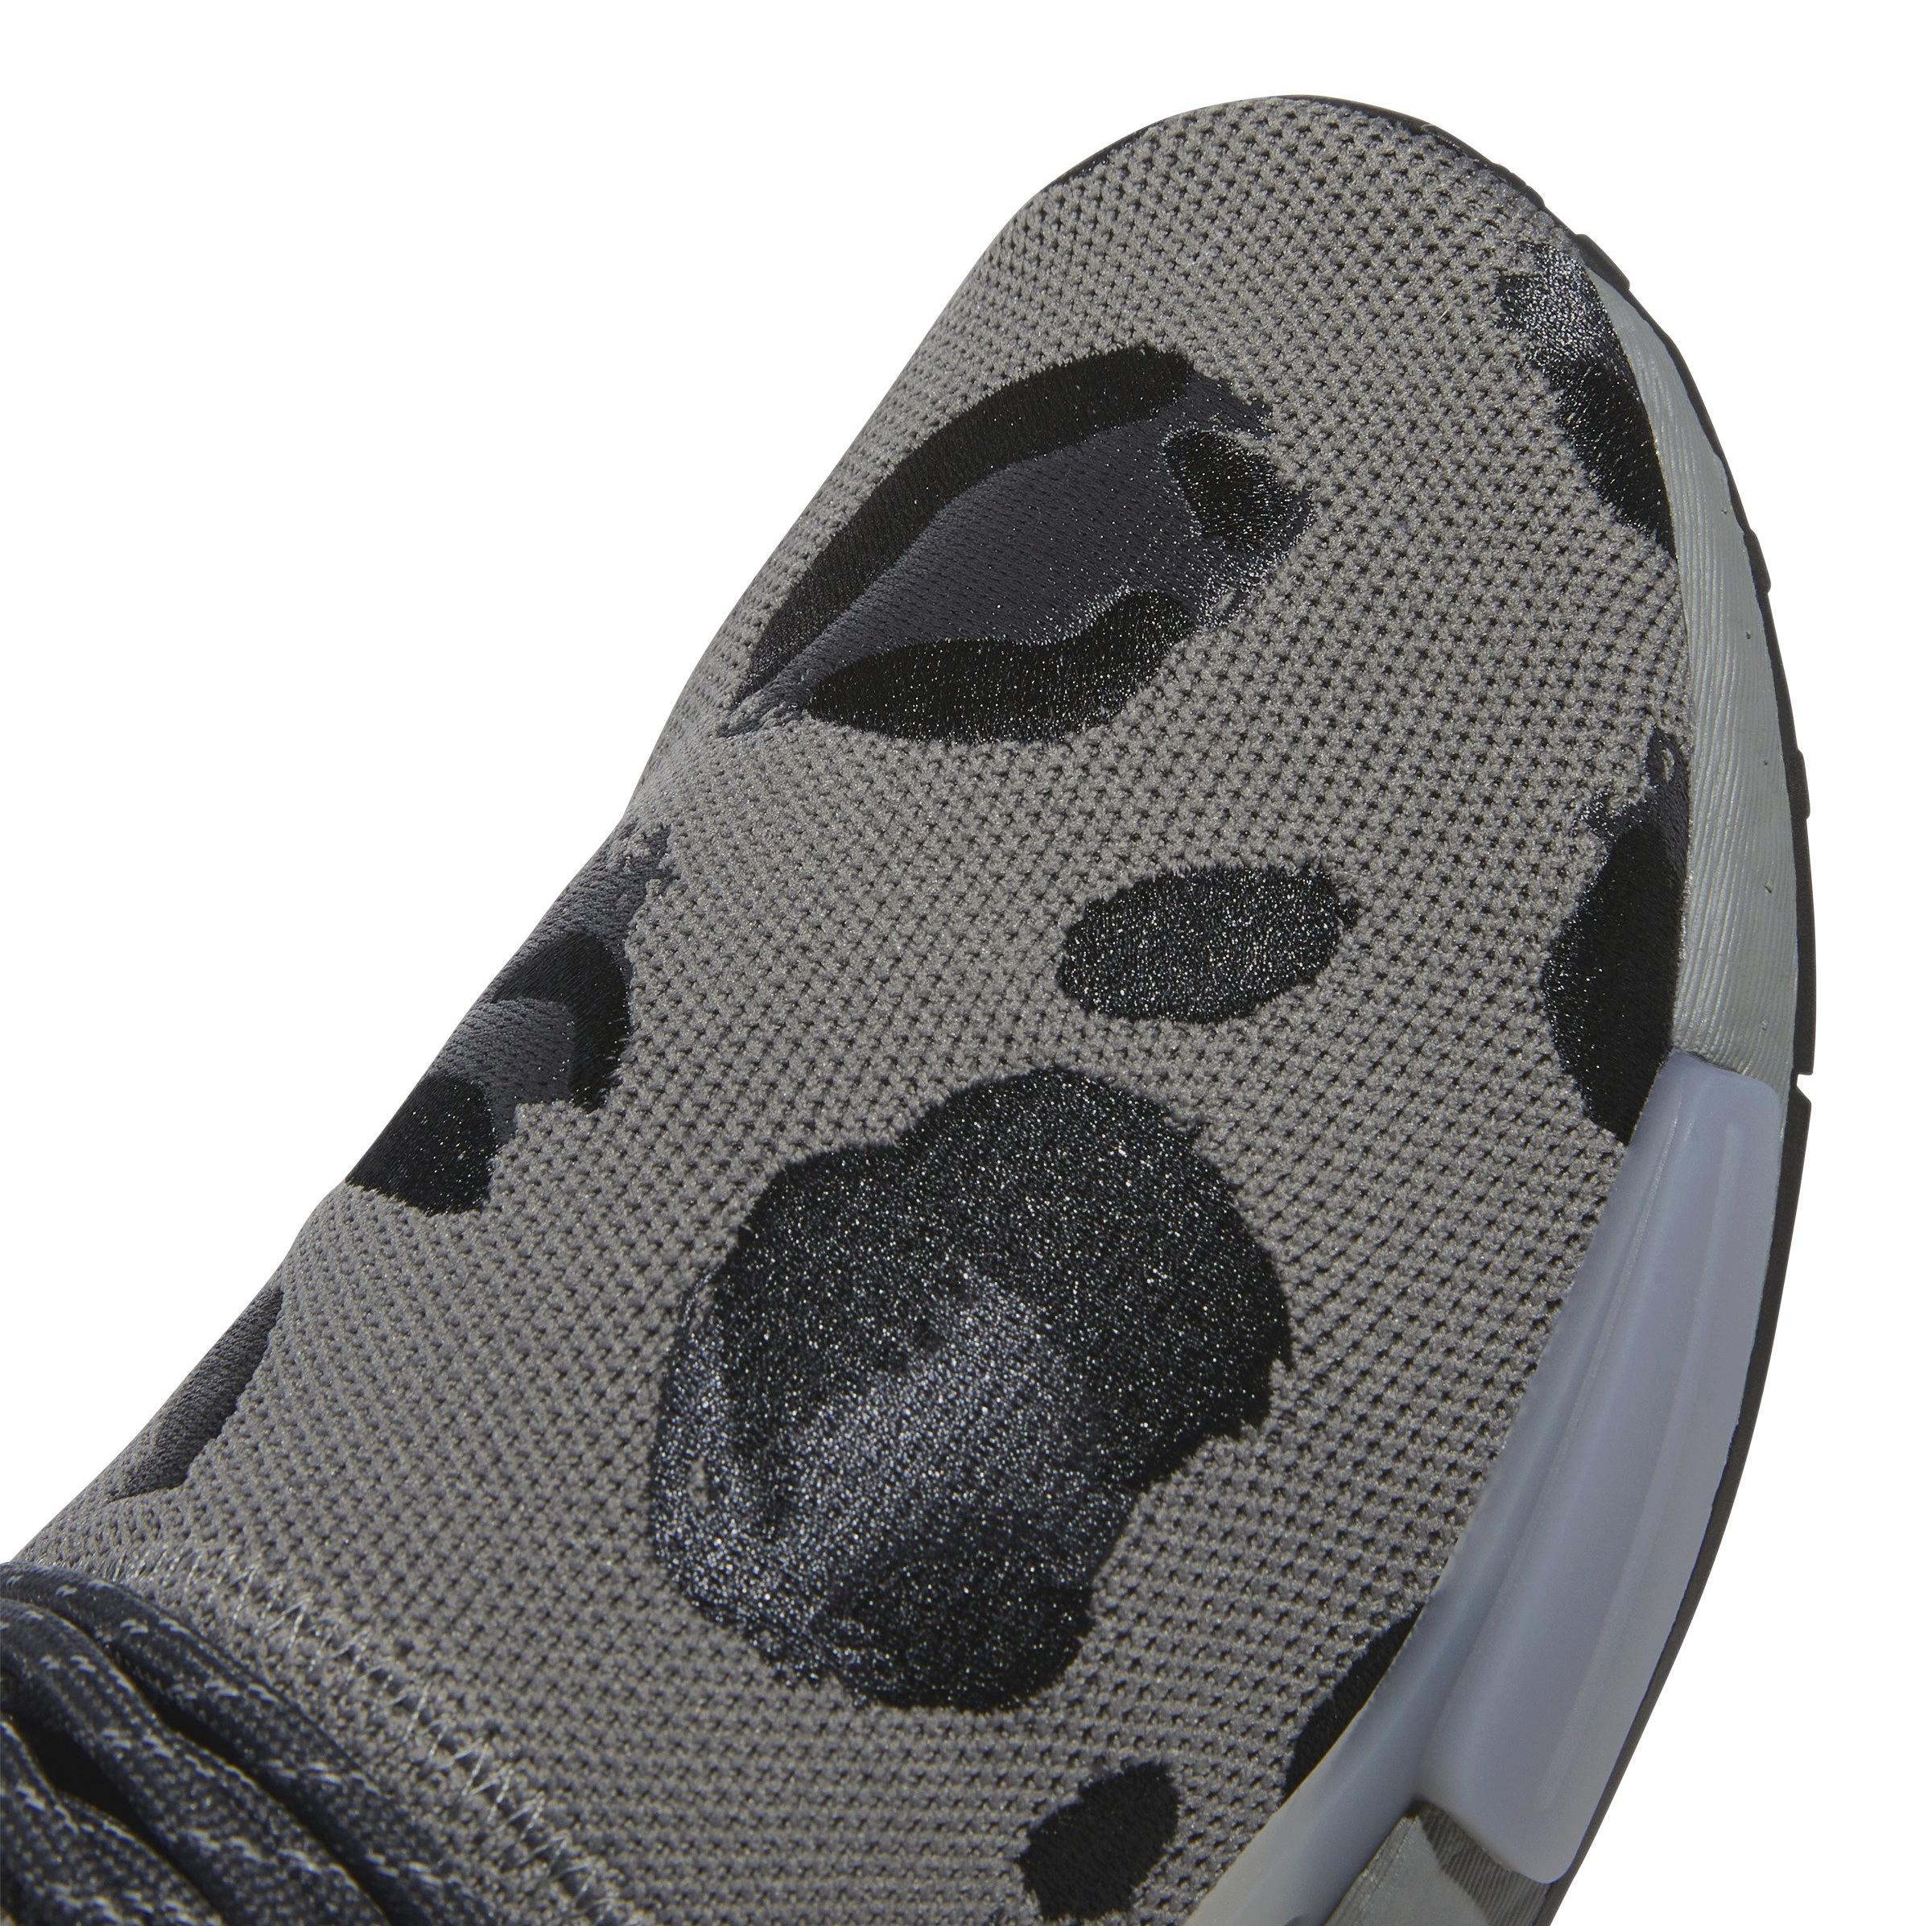 Sneakers Release – adidas Originals x Pharrell Williams​ Hu NMD  “Animal Print” Unisex Shoe Launching 11/23